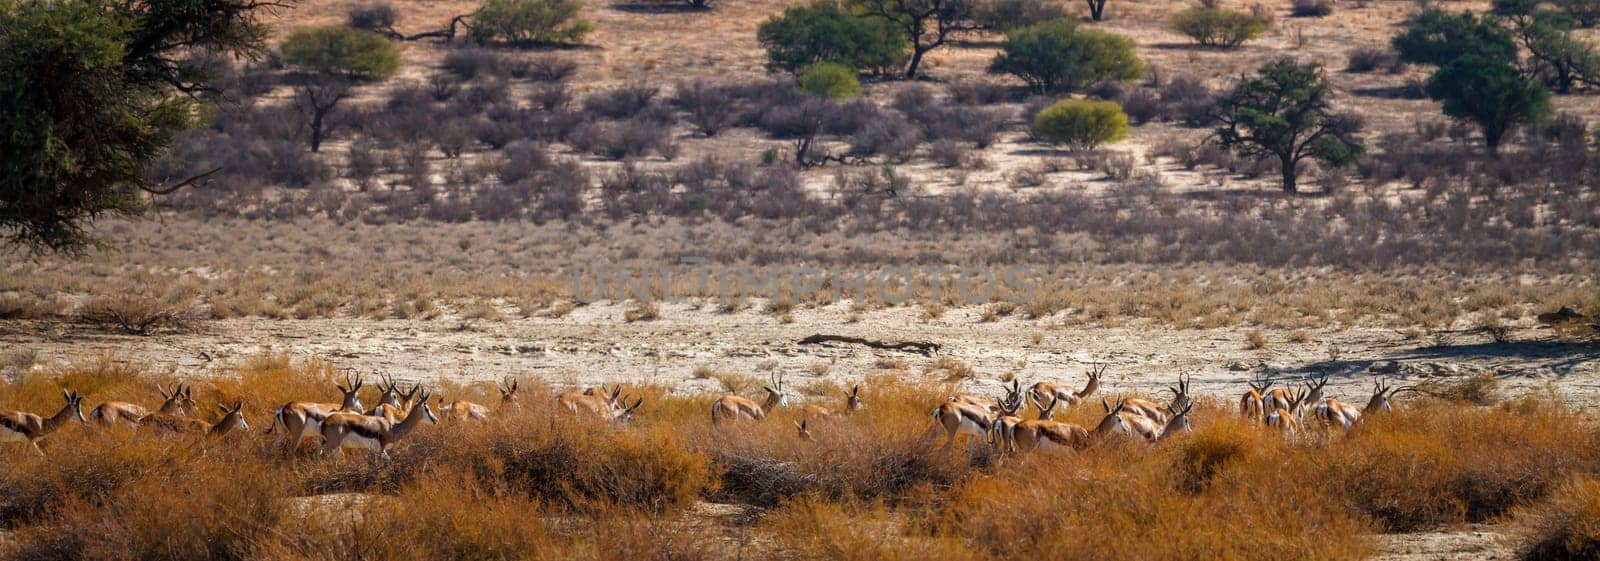 Springbok herd in dry land scenery in Kgalagari transfrontier park, South Africa ; specie Antidorcas marsupialis family of Bovidae